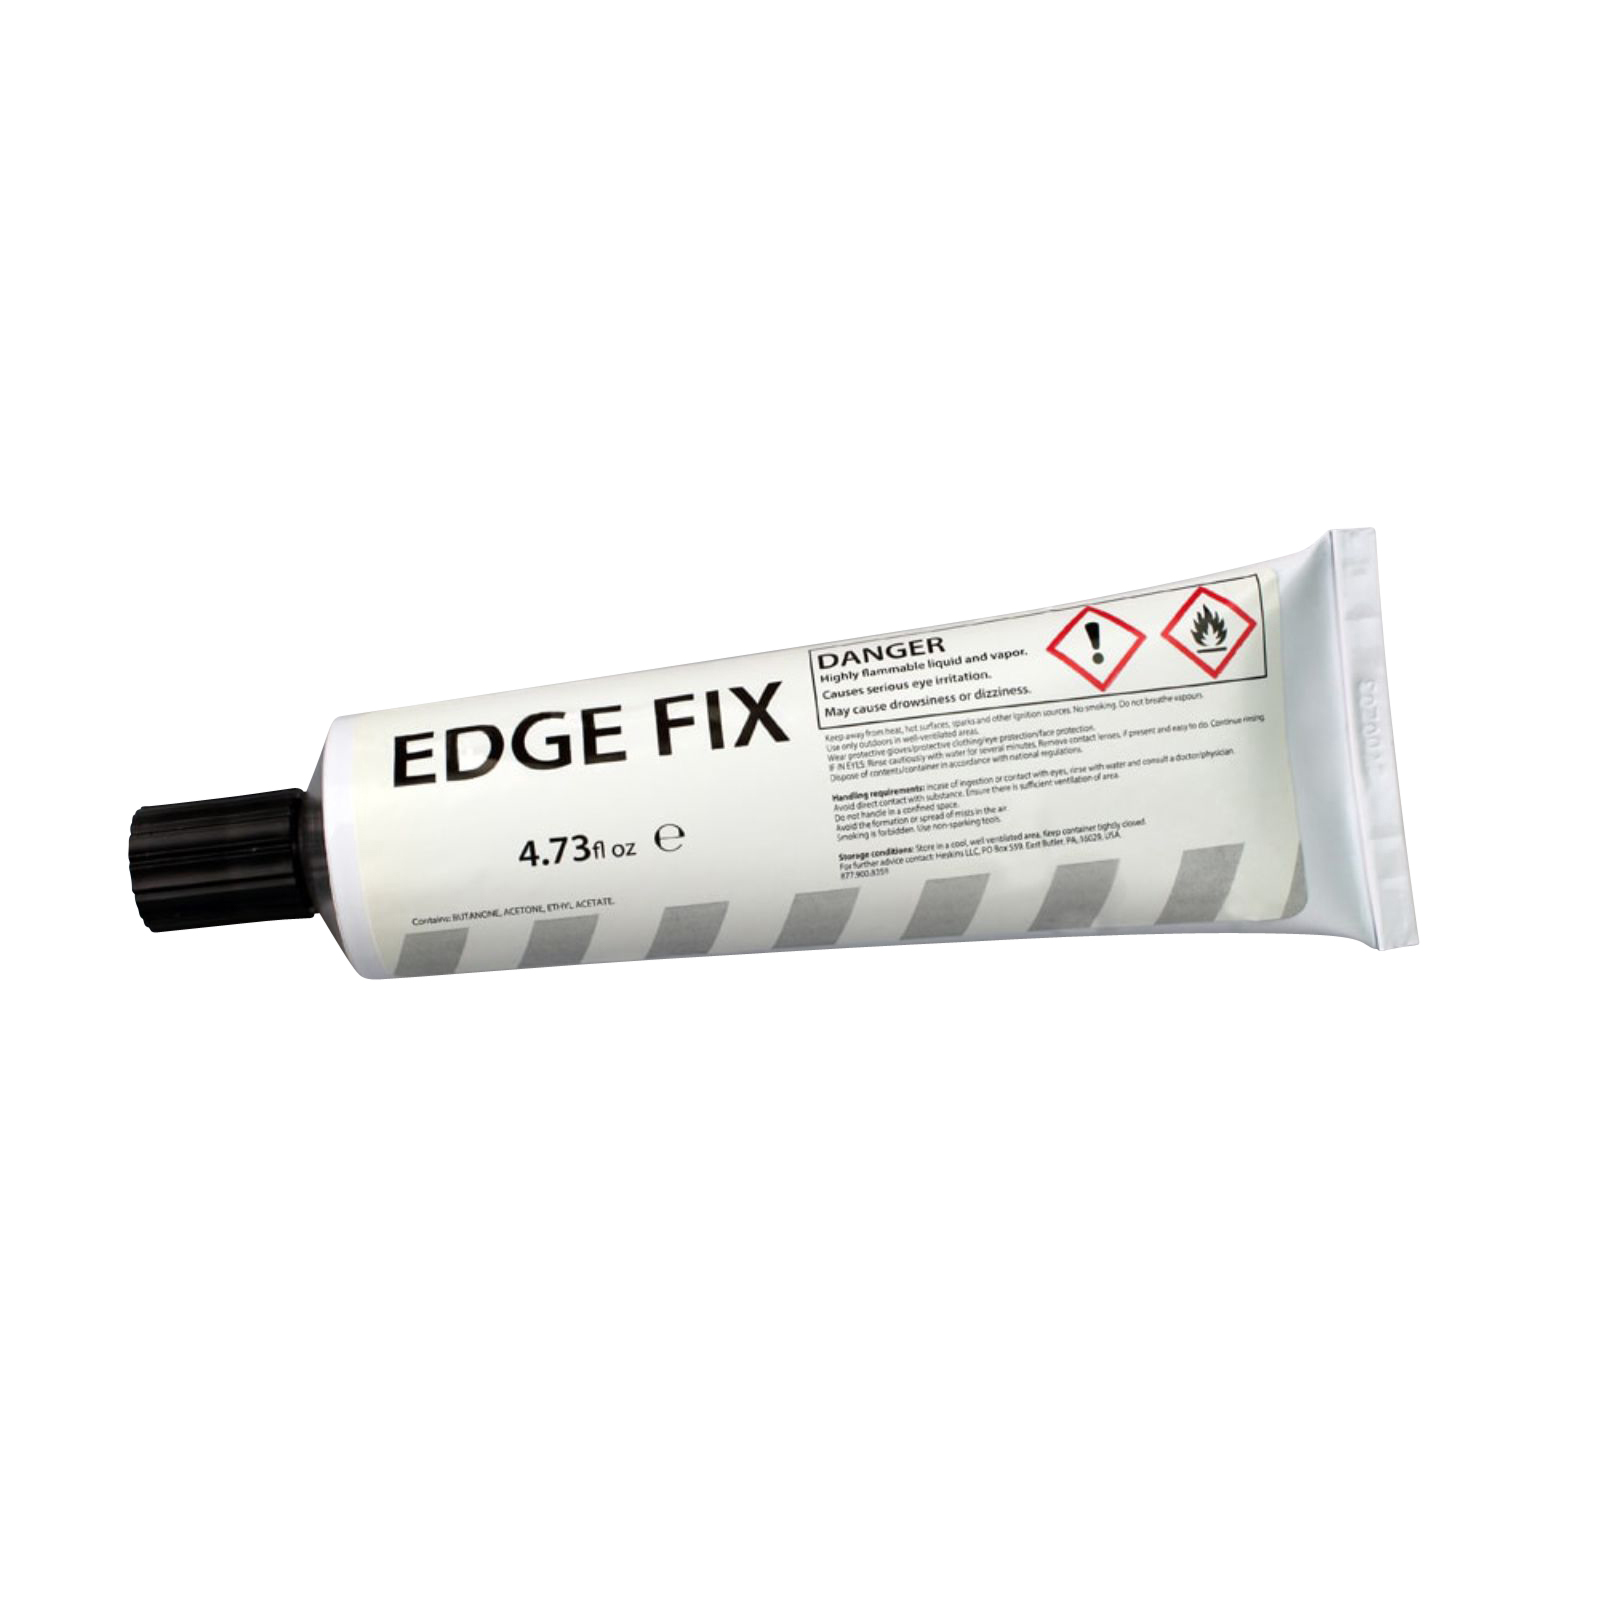 Heskins E-F Edge Fix Sealer